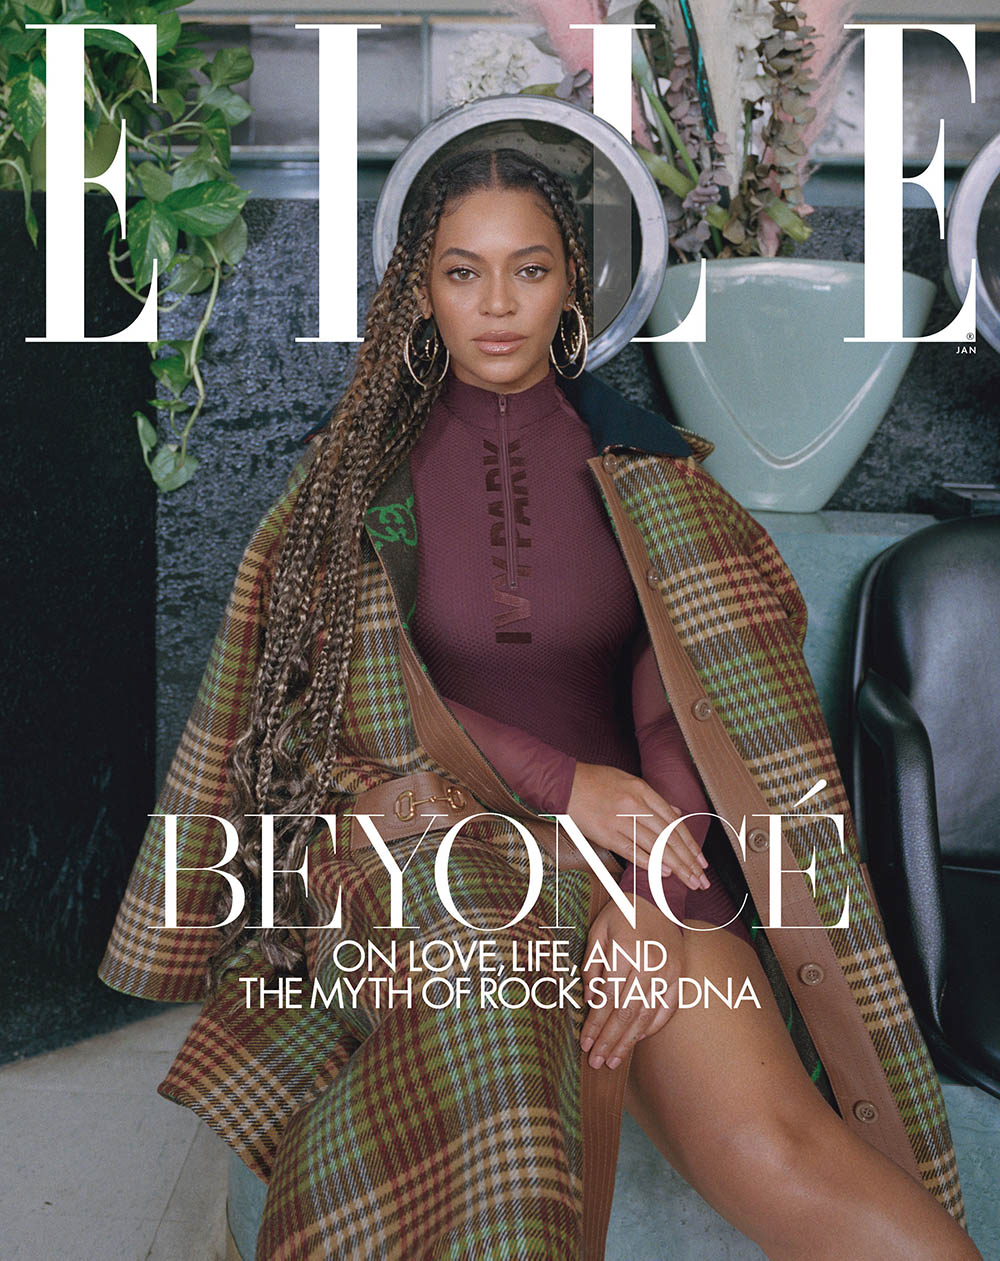 Beyoncé covers Elle US January 2020 by Melina Matsoukas